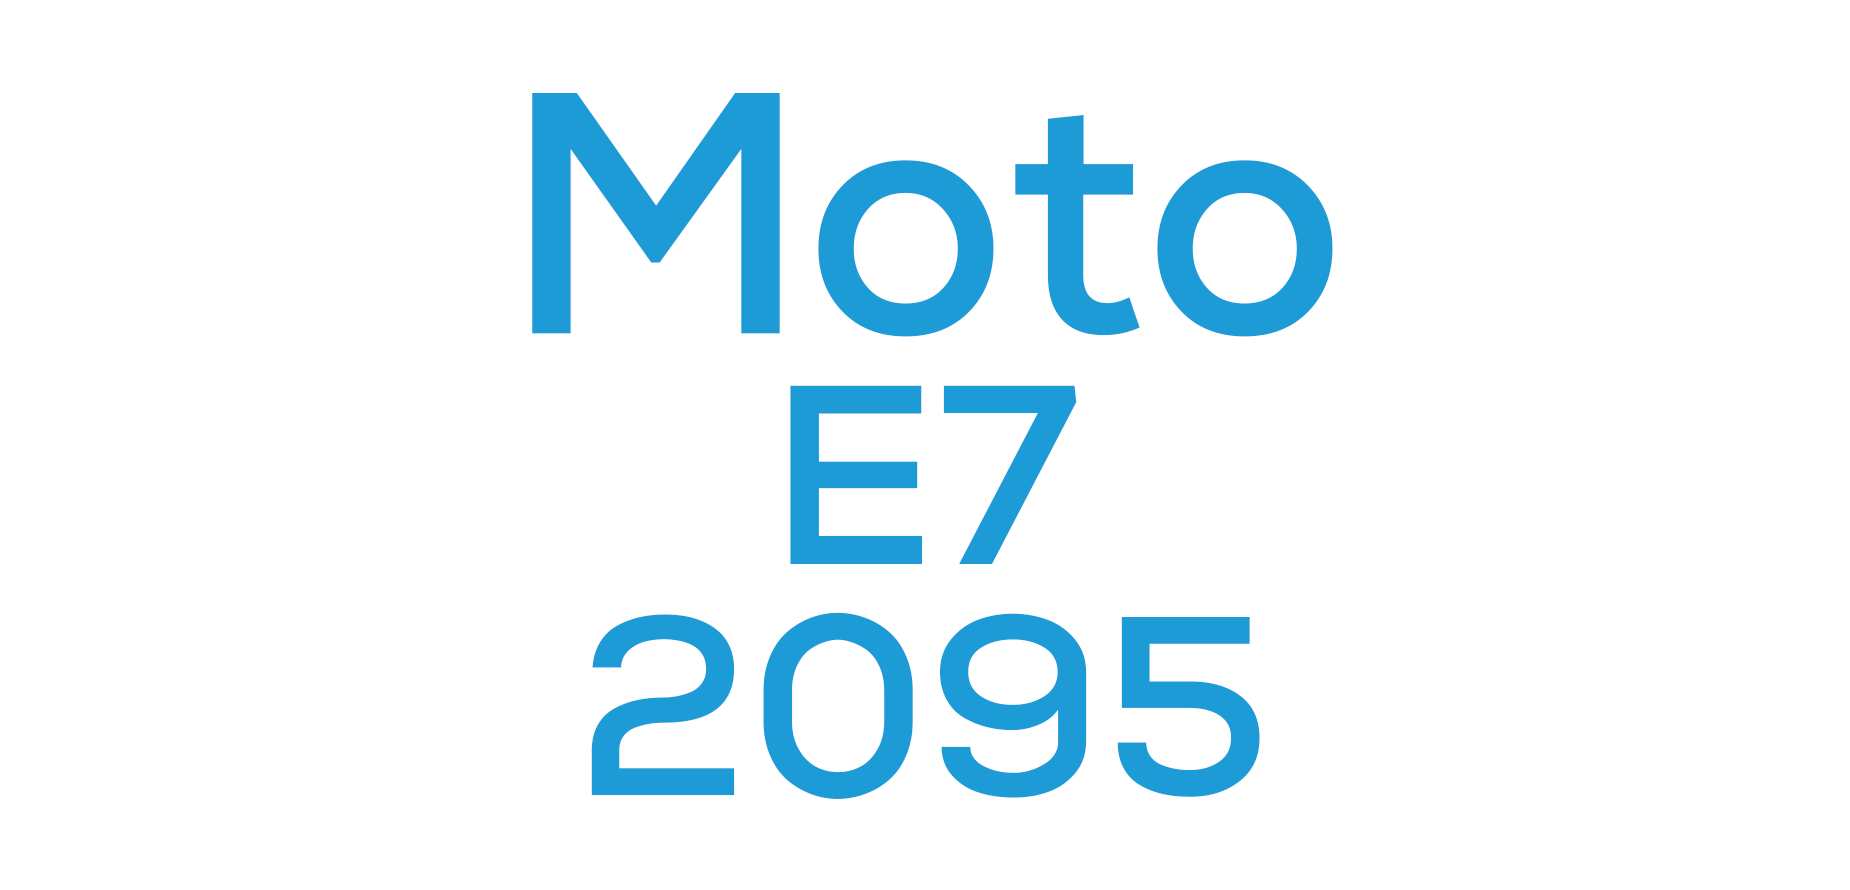 E7 2020 (2095)